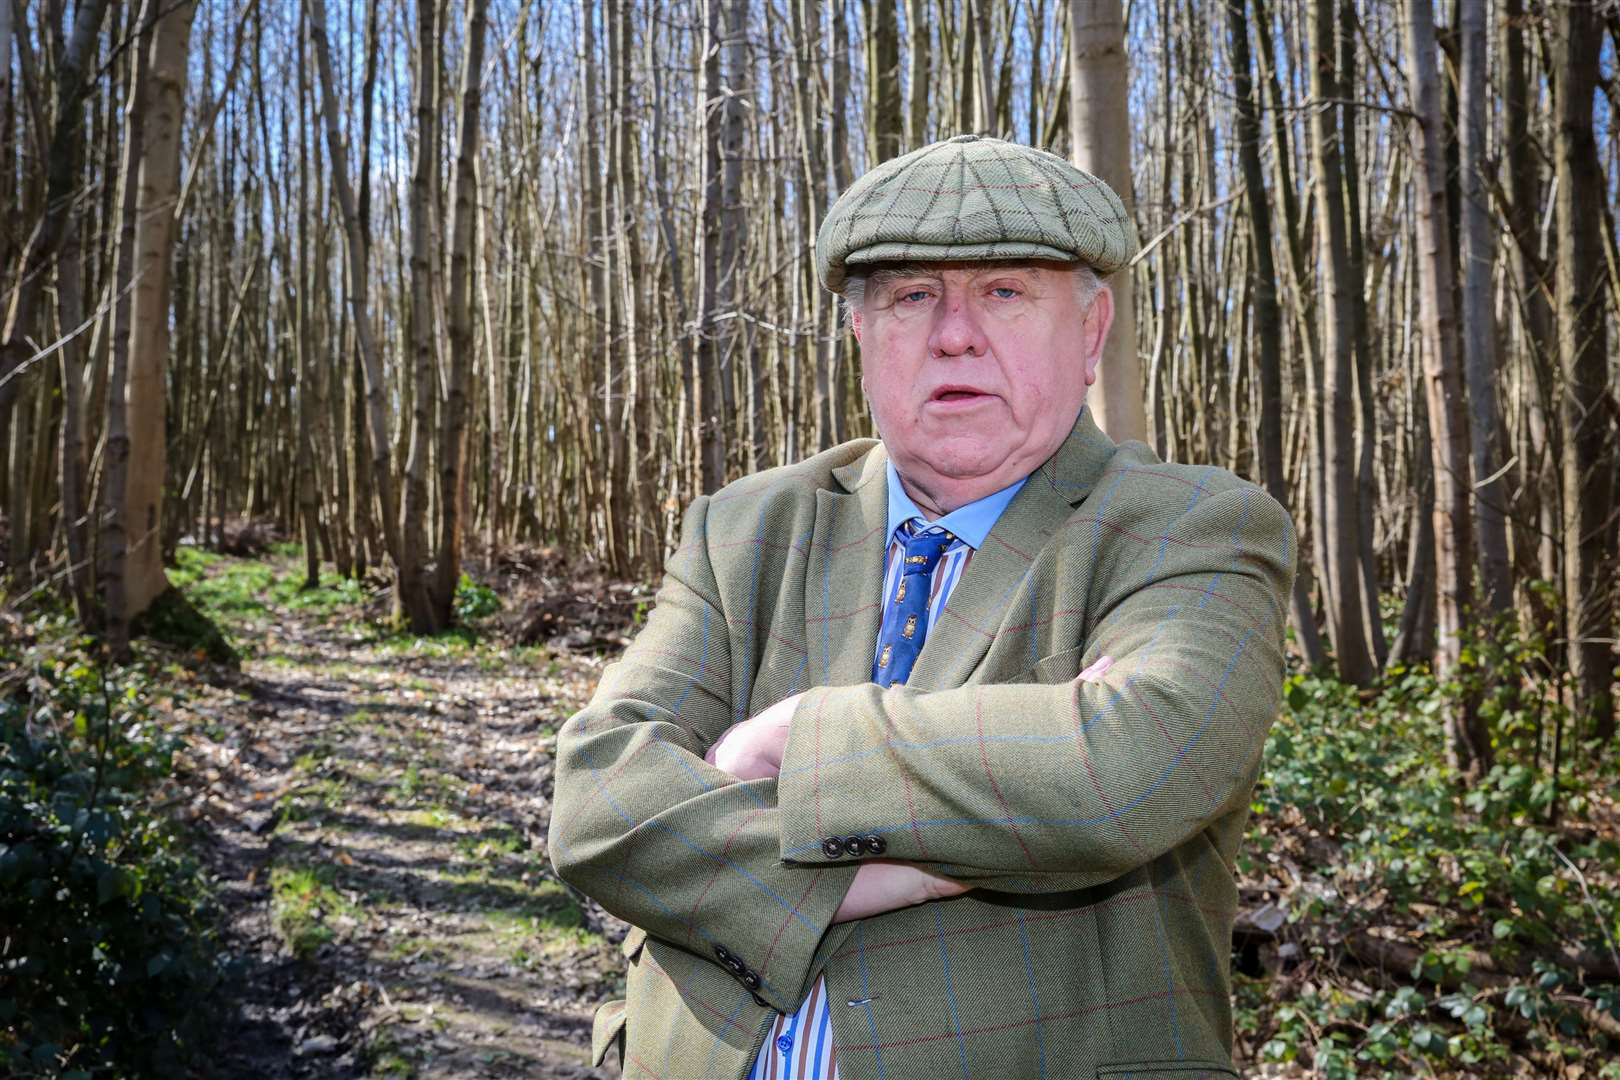 Fergus Wilson is planning 33 rural homes near Boughton Monchelsea